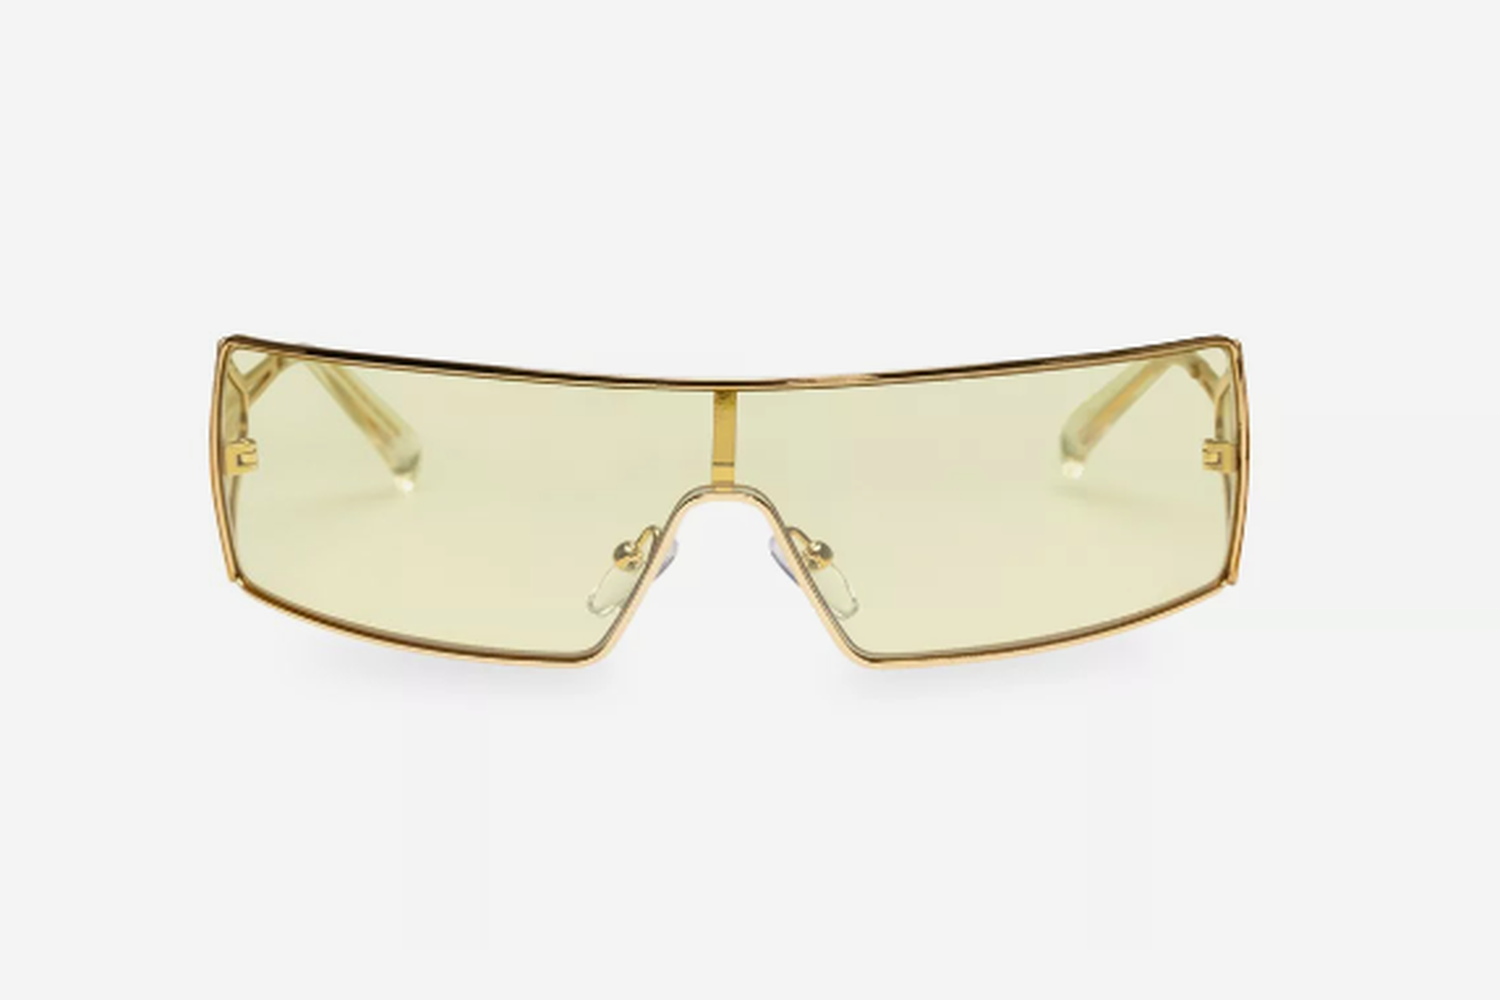 The Luxx Sheild Sunglasses